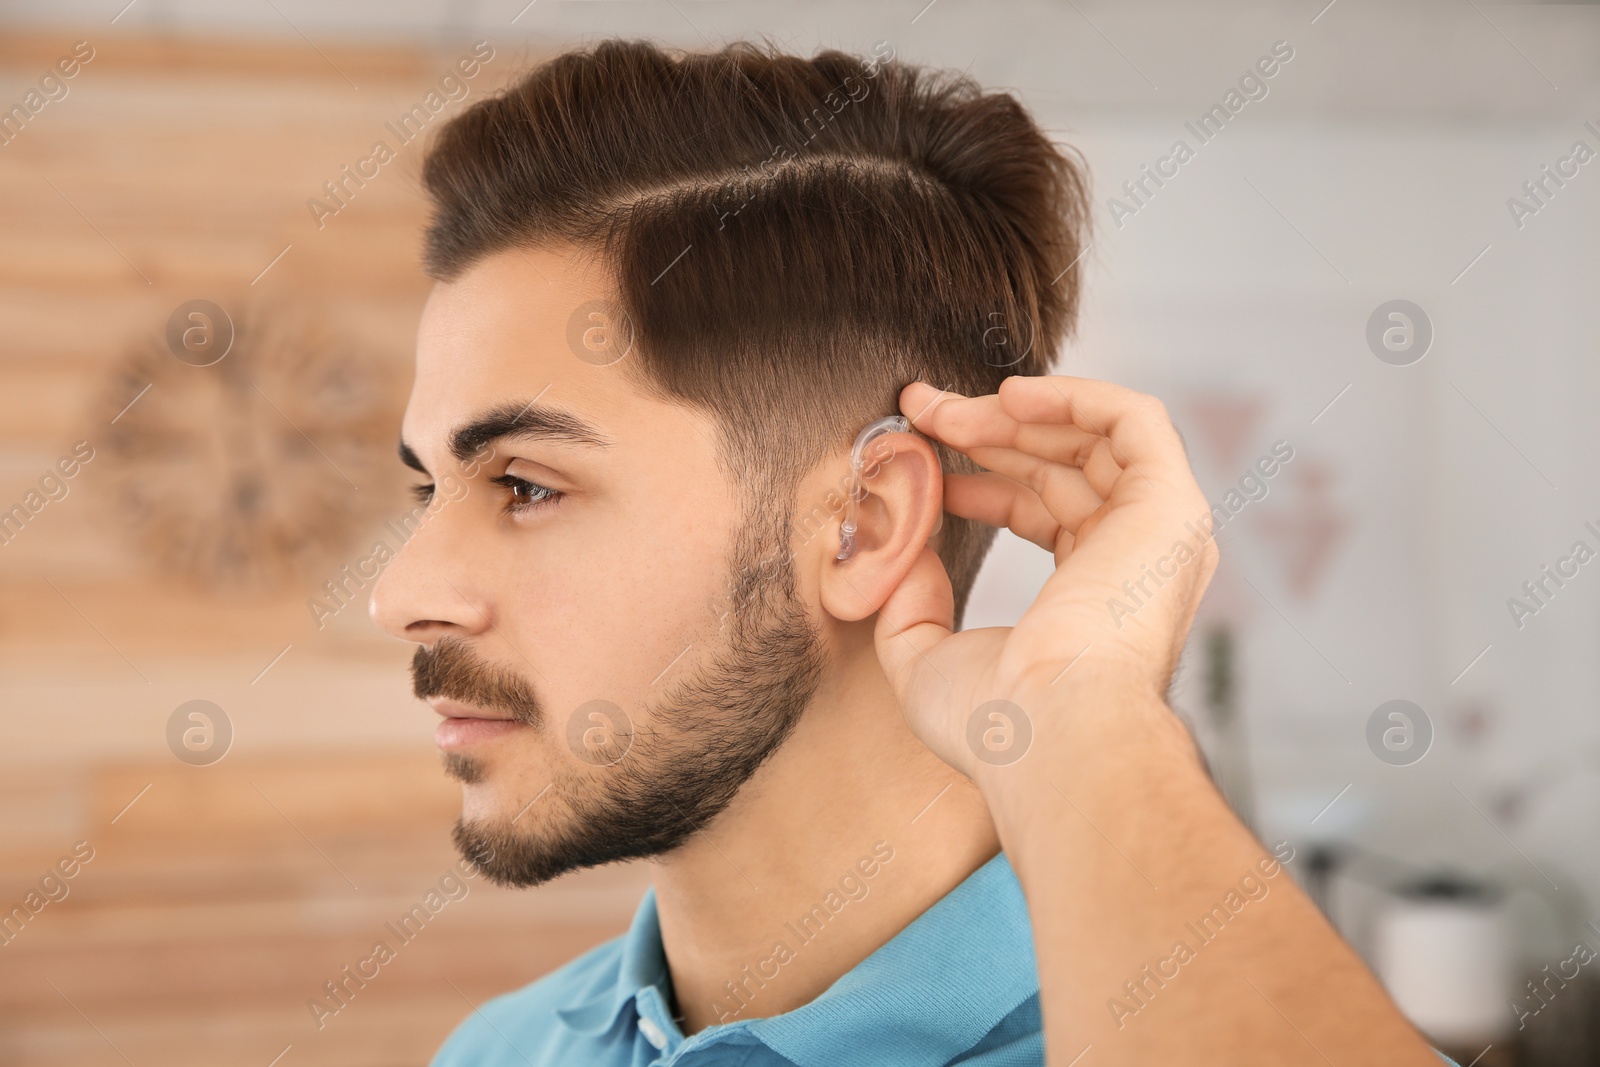 Photo of Young man adjusting hearing aid at home